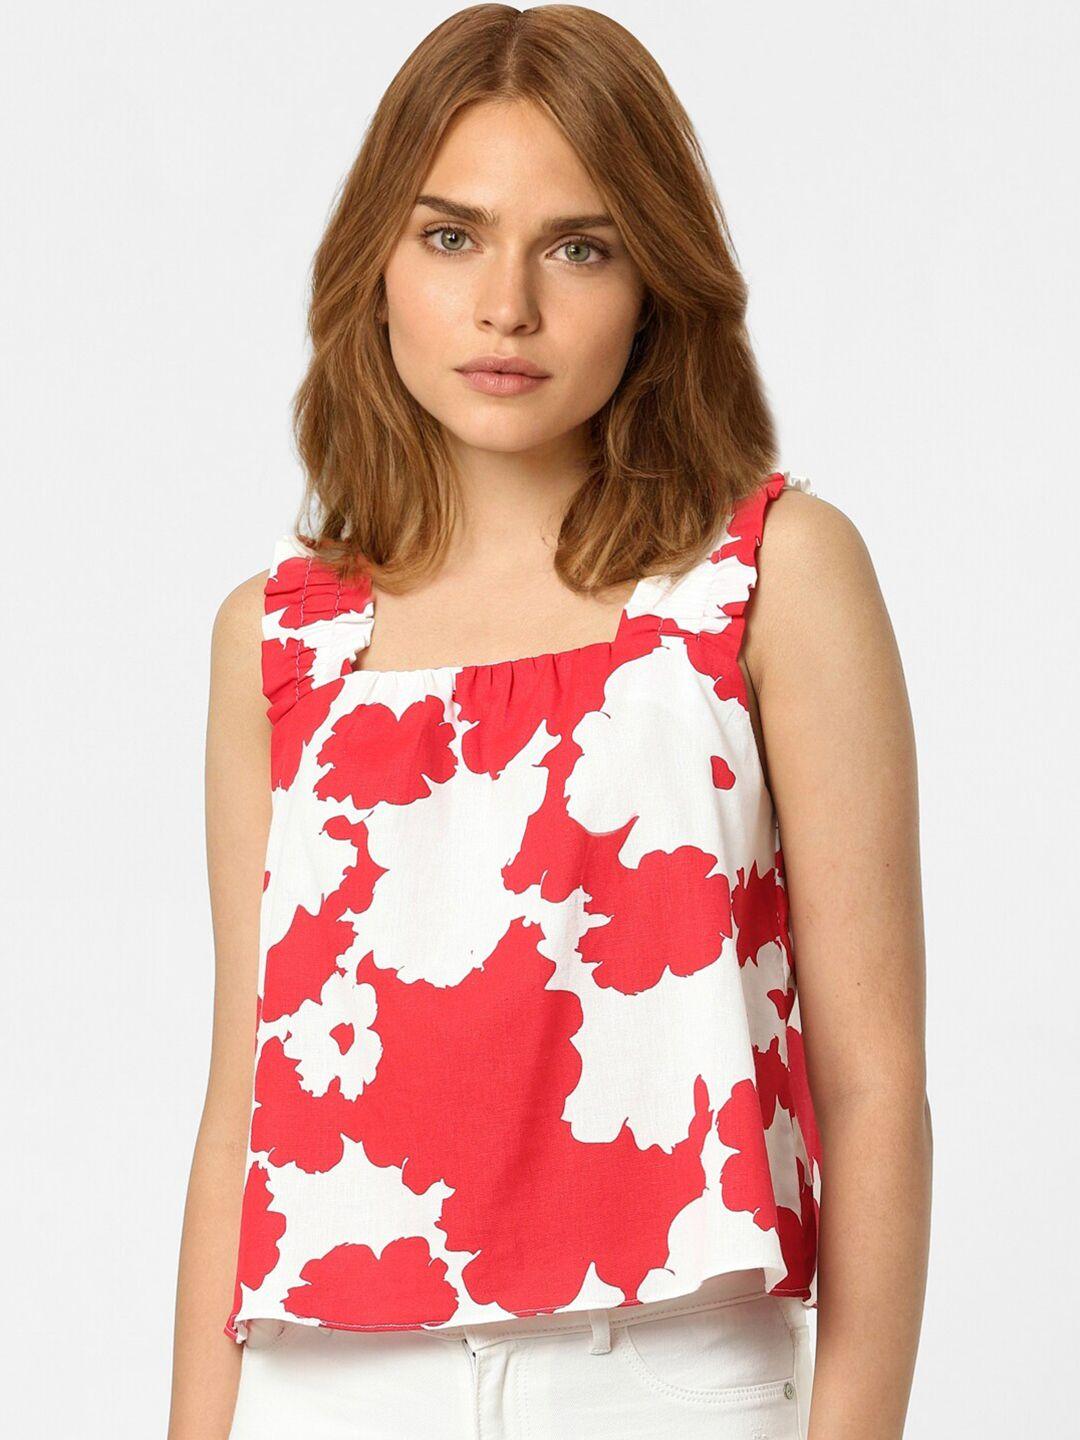 vero moda women red floral print top